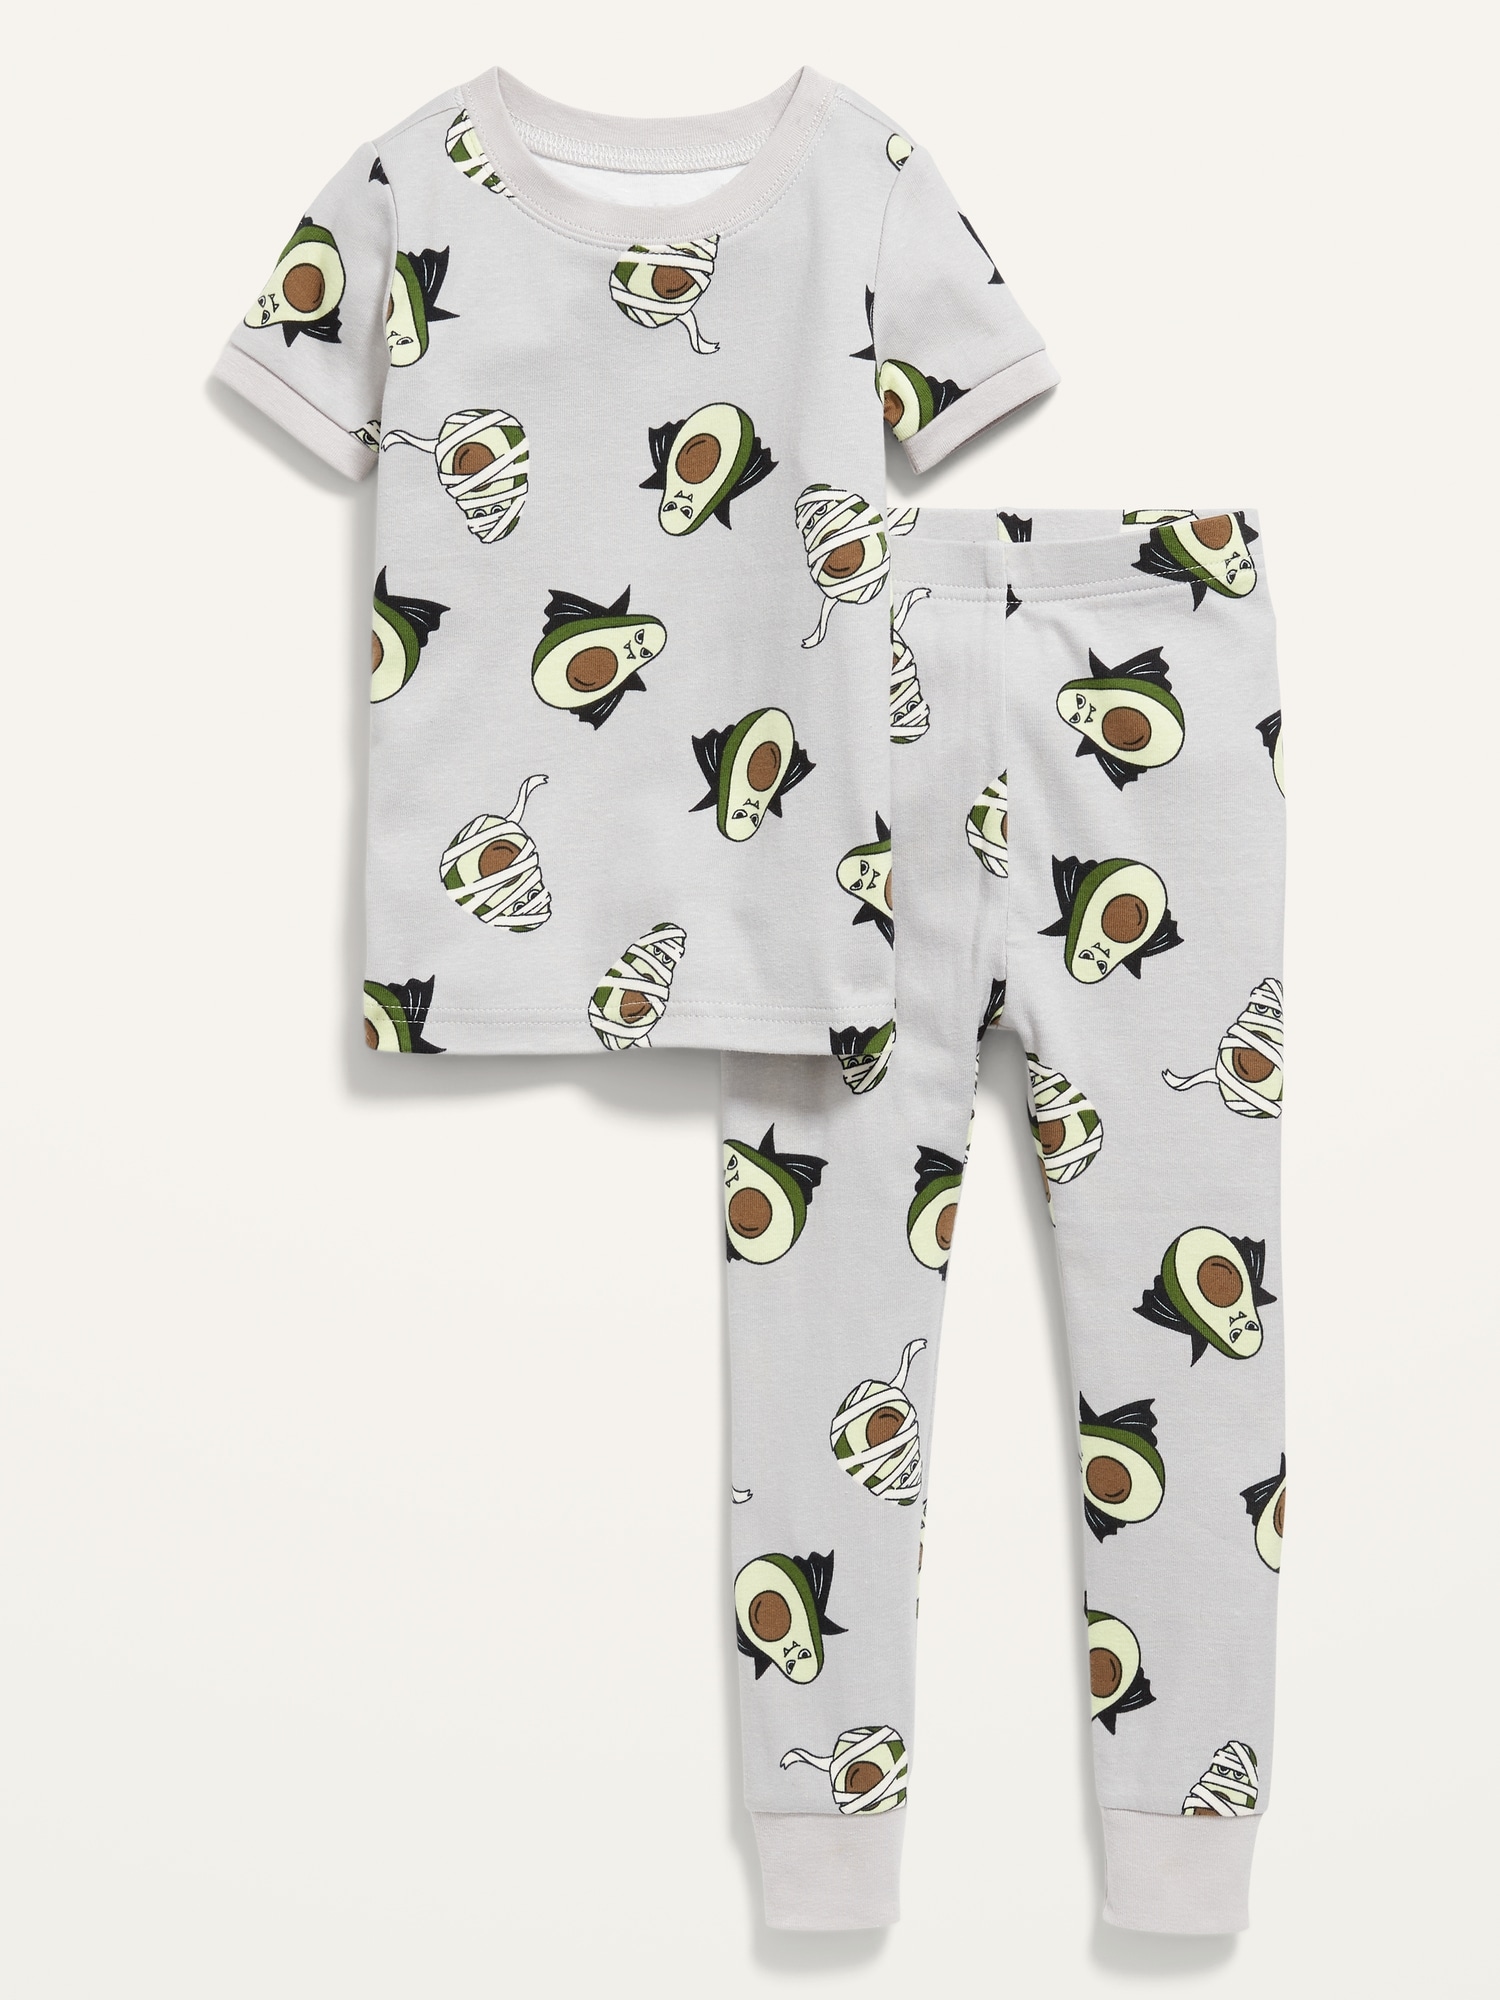 Gray Bat Boys Shorts 2 Piece Pajama Set 100% Cotton 